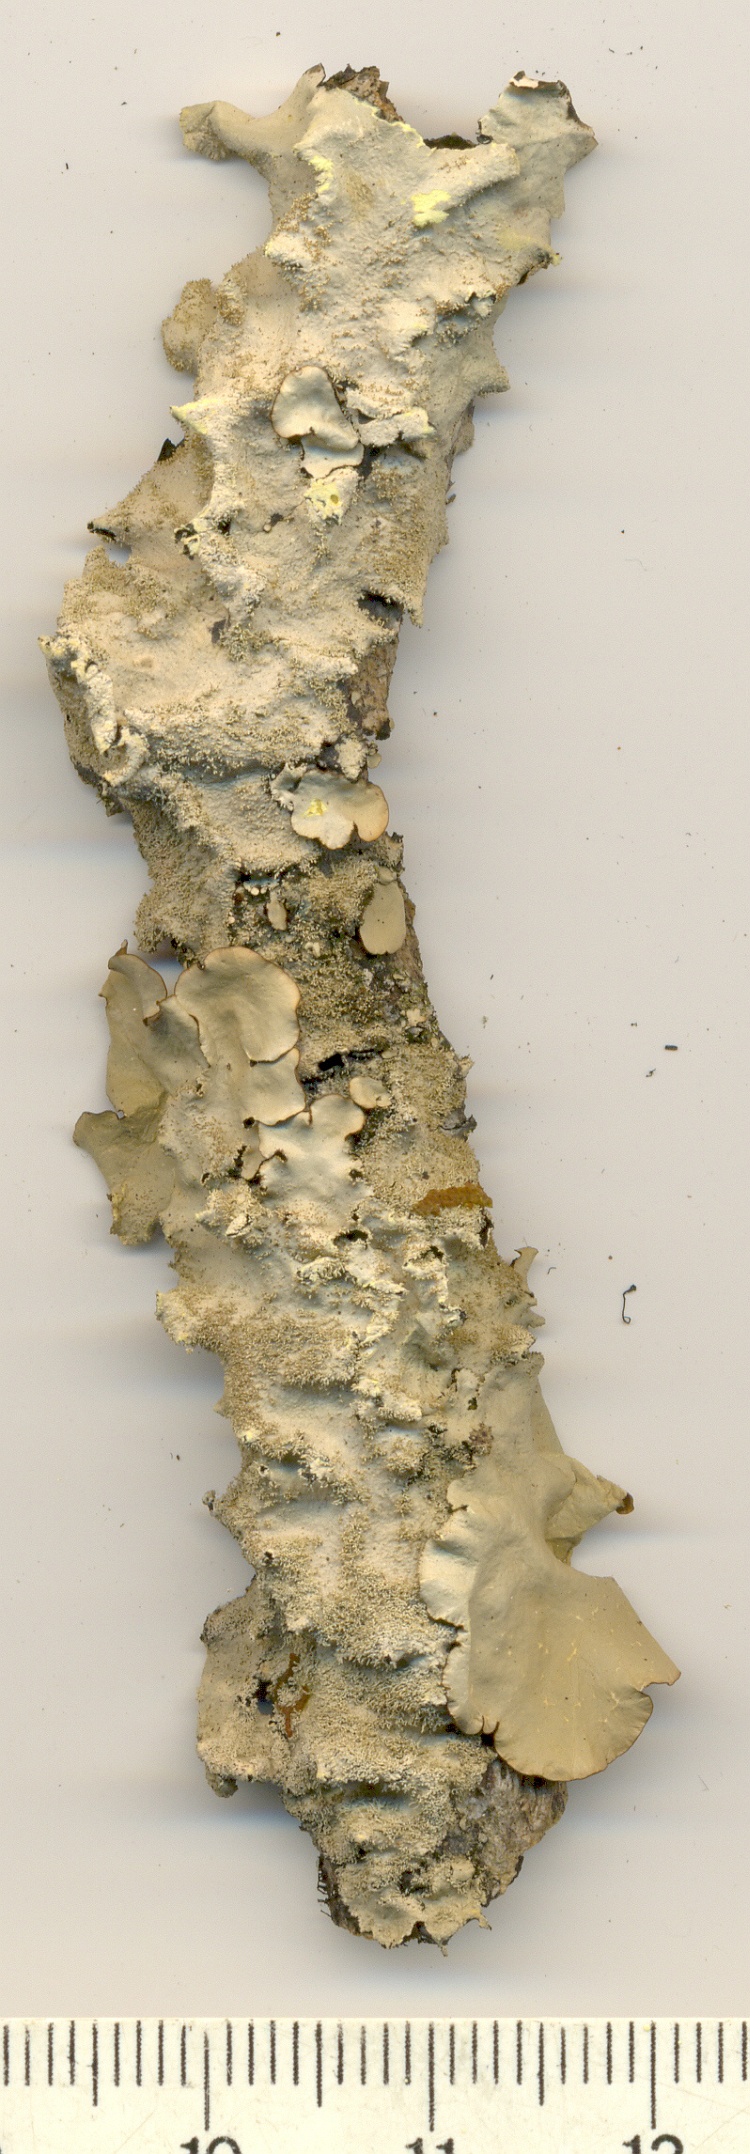 Parmotrema endosulphureum from Brazil, Paraná, Guaraqueçaba leg. S. Eliasaro & C.G. Donha 2645 (UPCB)